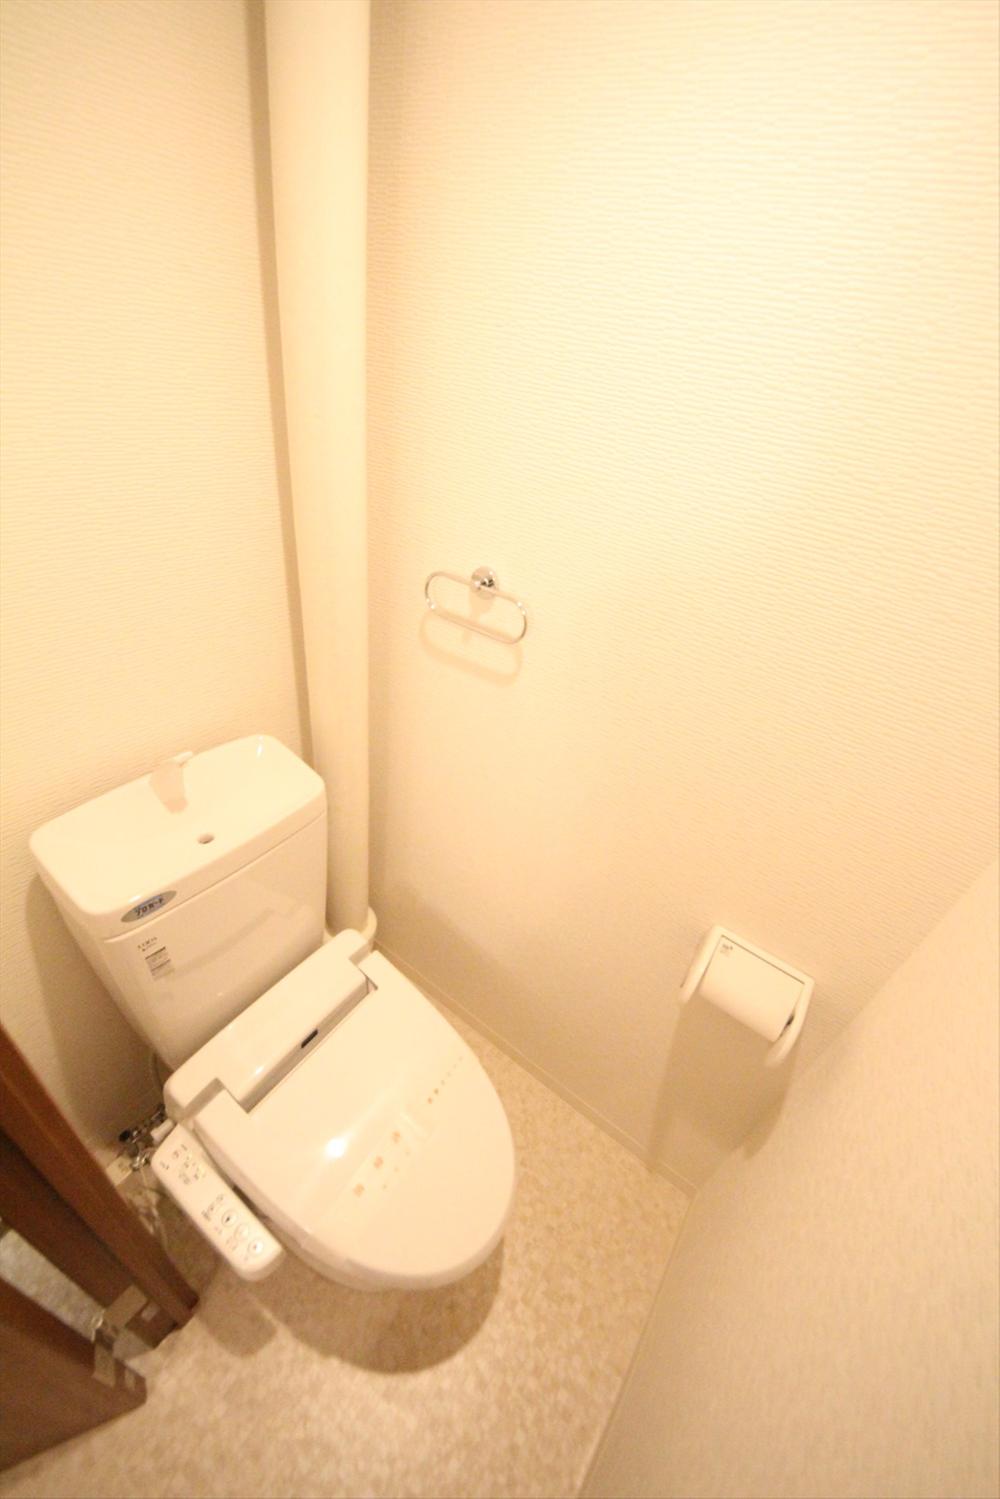 Toilet. (November 2013) Shooting